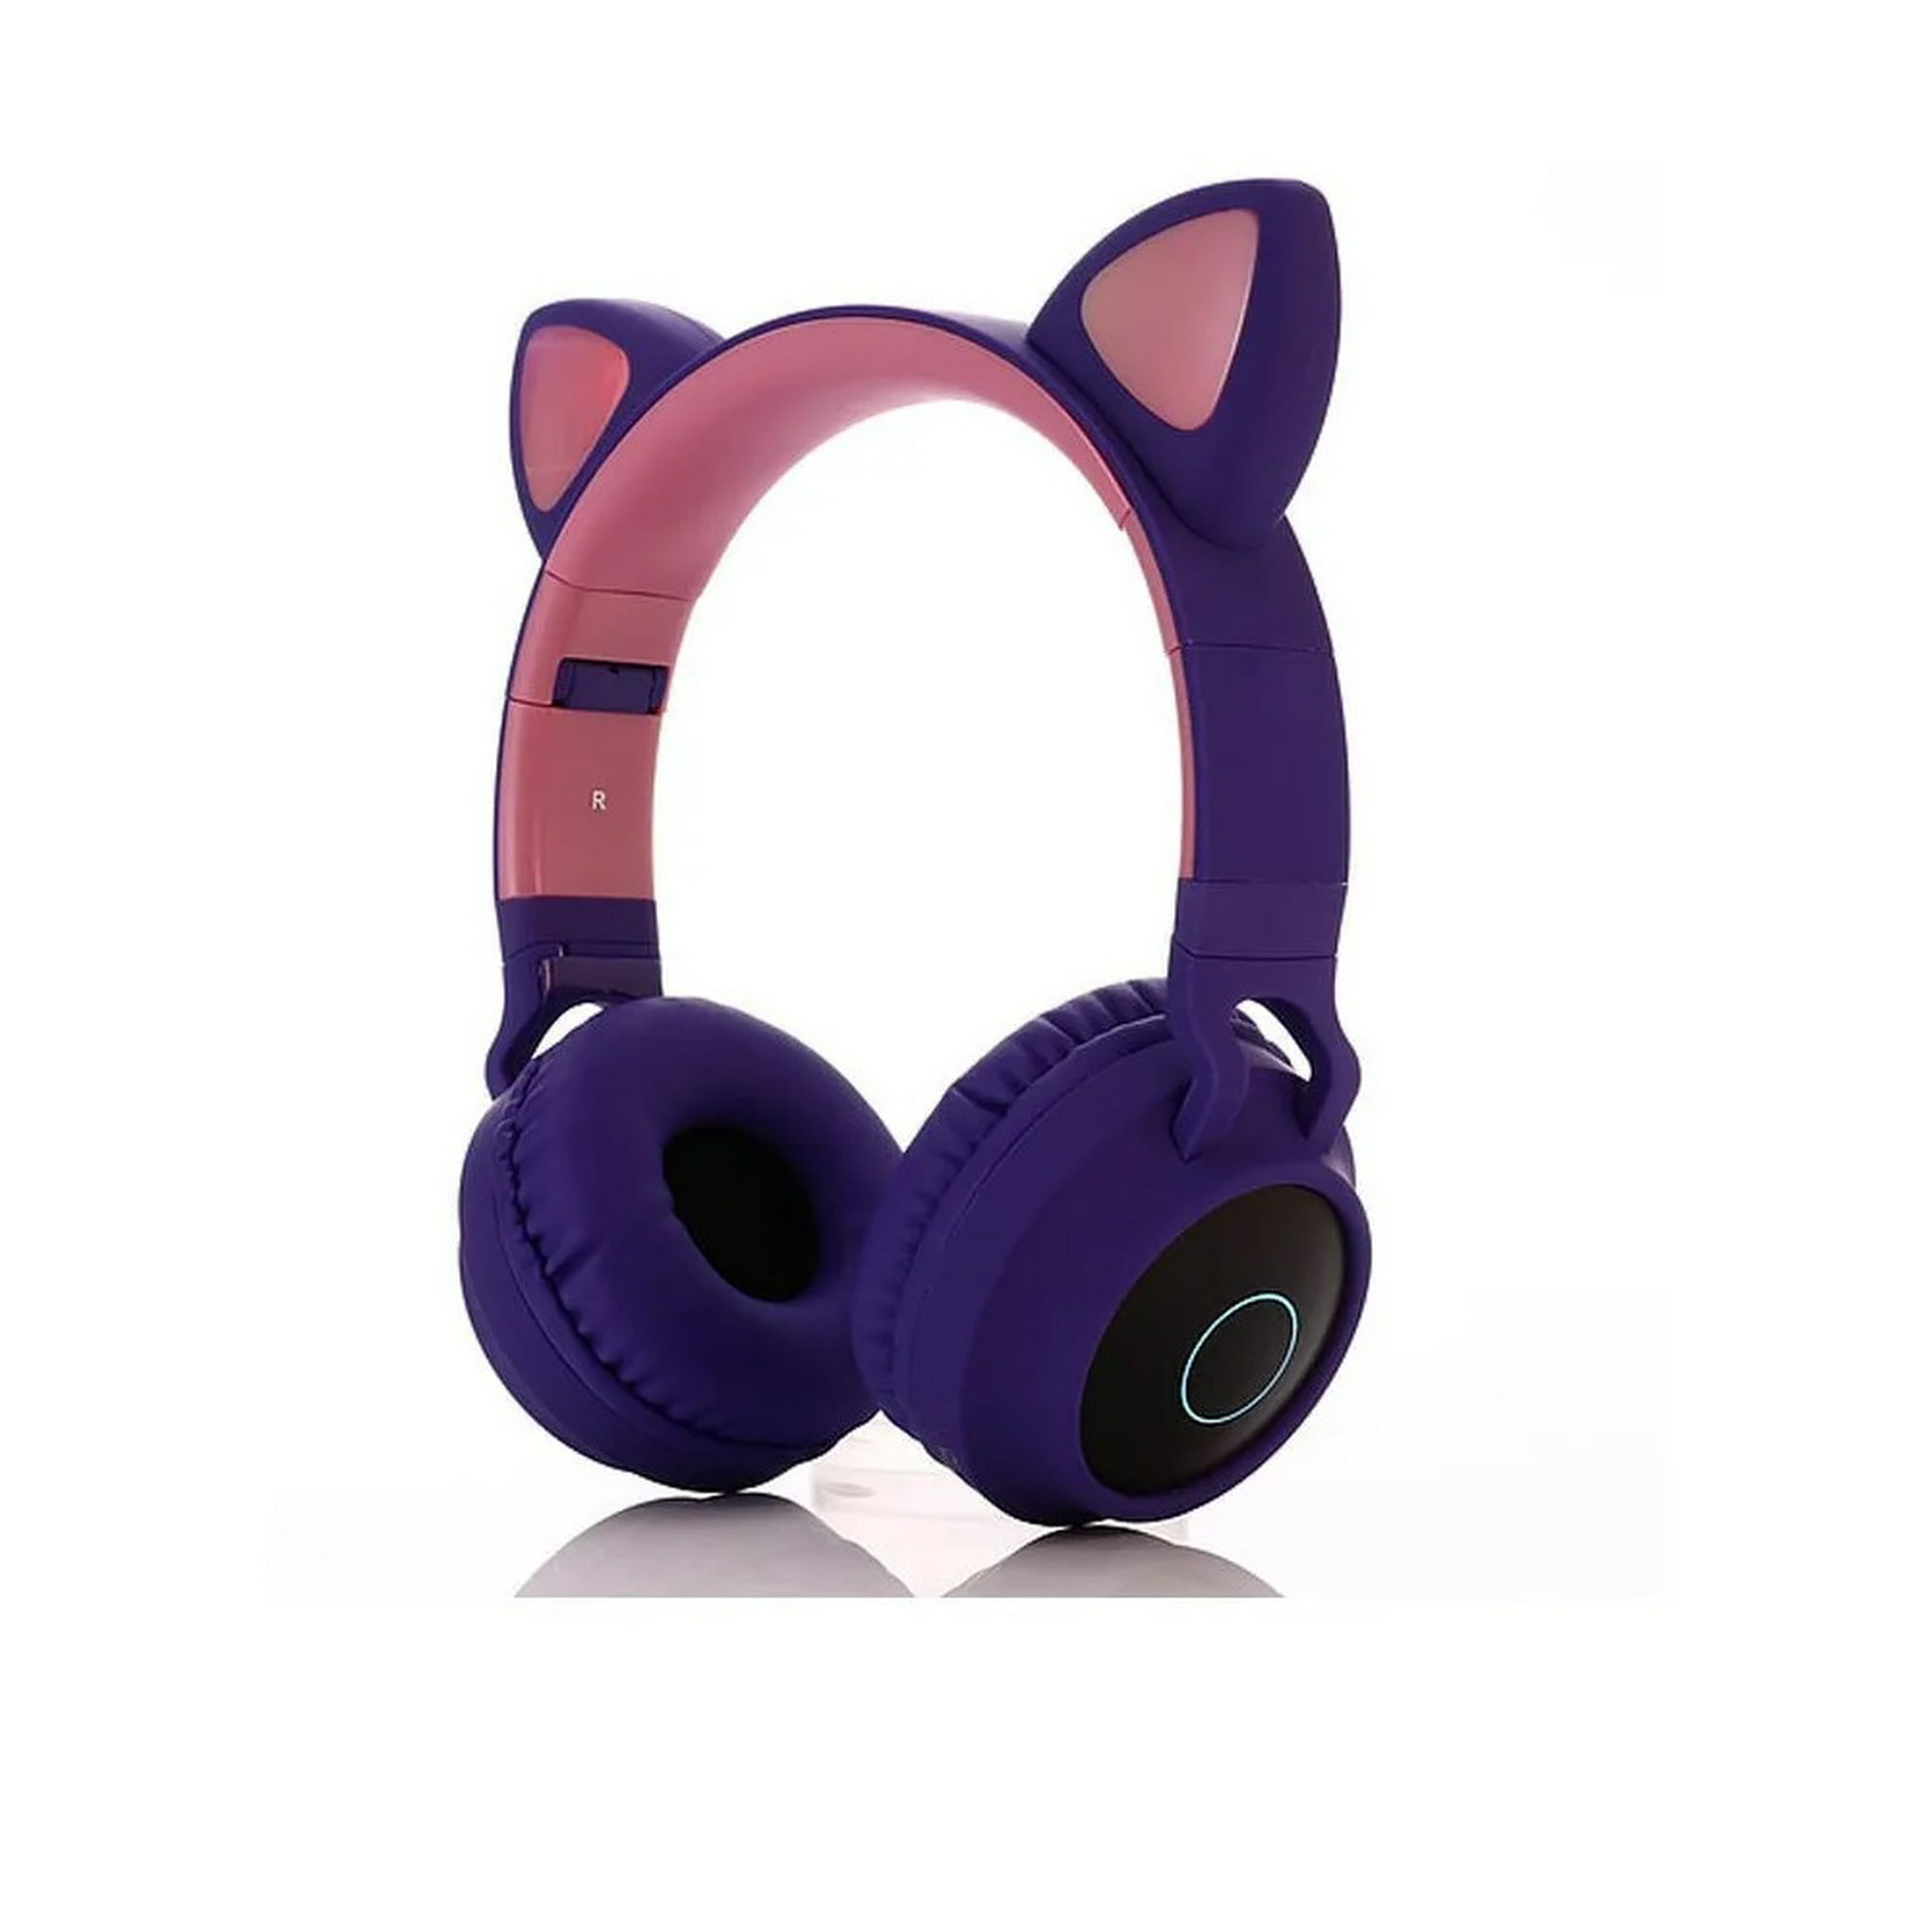 🎧 Audífonos inalámbricos Bluetooth para Chicas Gamers Kawaii Con luces 🎧